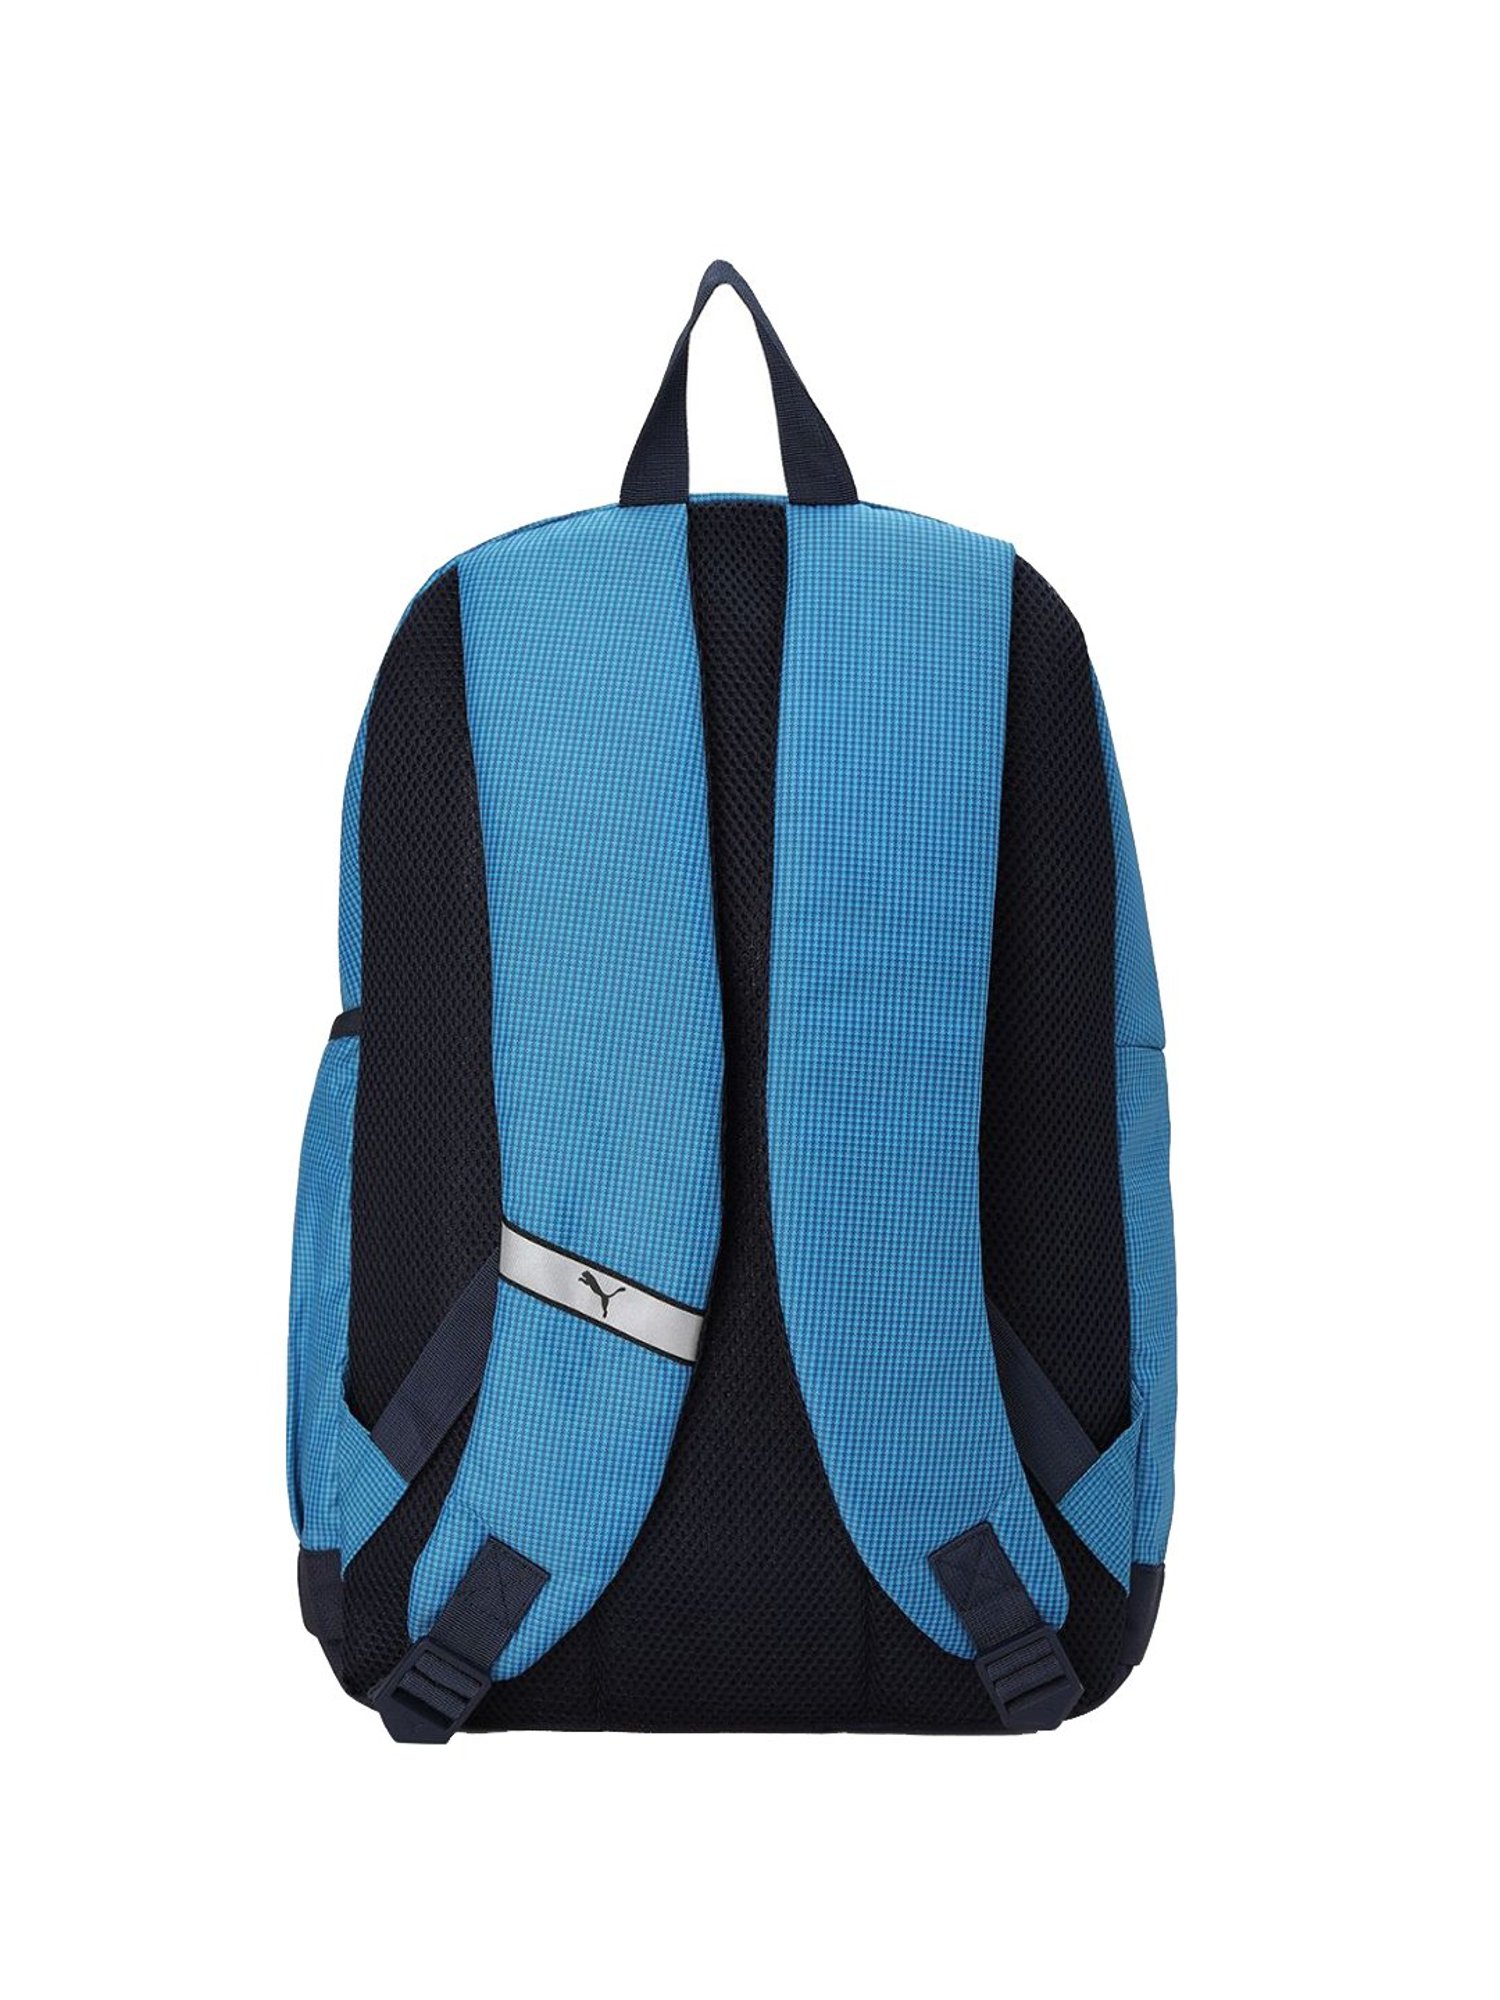 Puma Phase Small Backpack Blue 079879 05 | Sportsman24